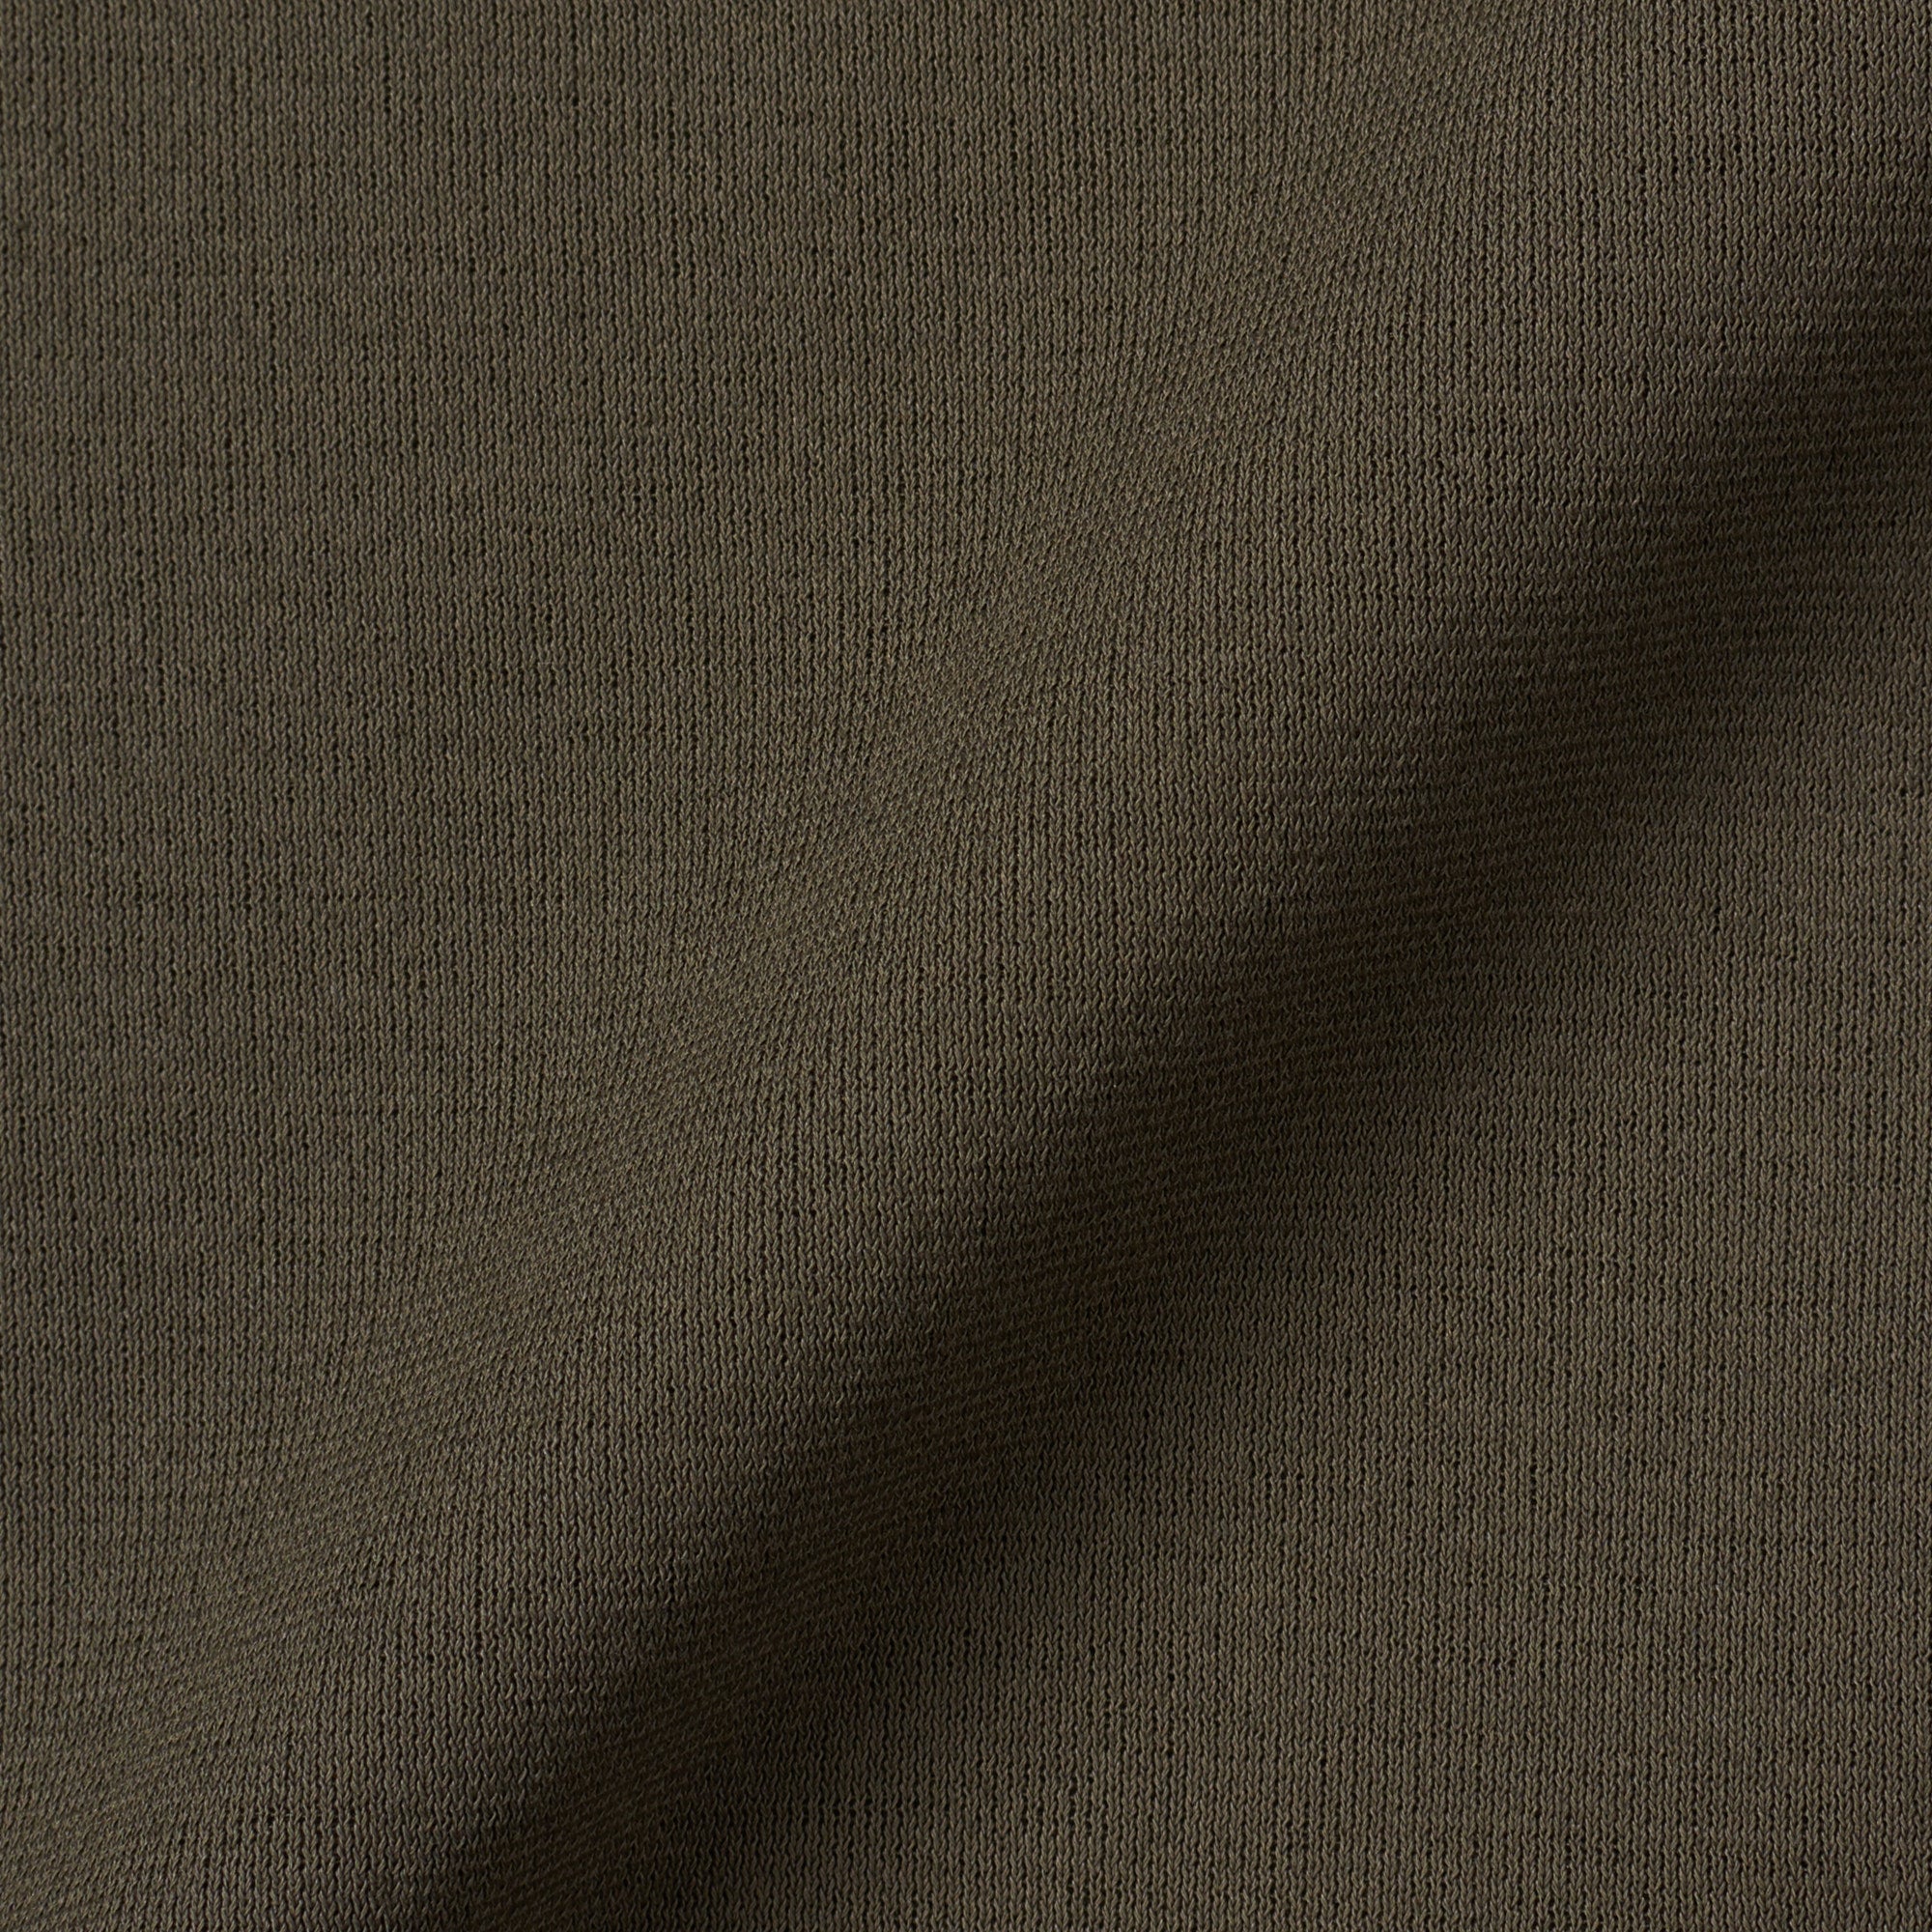 Kiton KIRED "Baciomc" Olive Exclusive Crepe Cotton Short Sleeve T-Shirt Slim 2023 KIRED